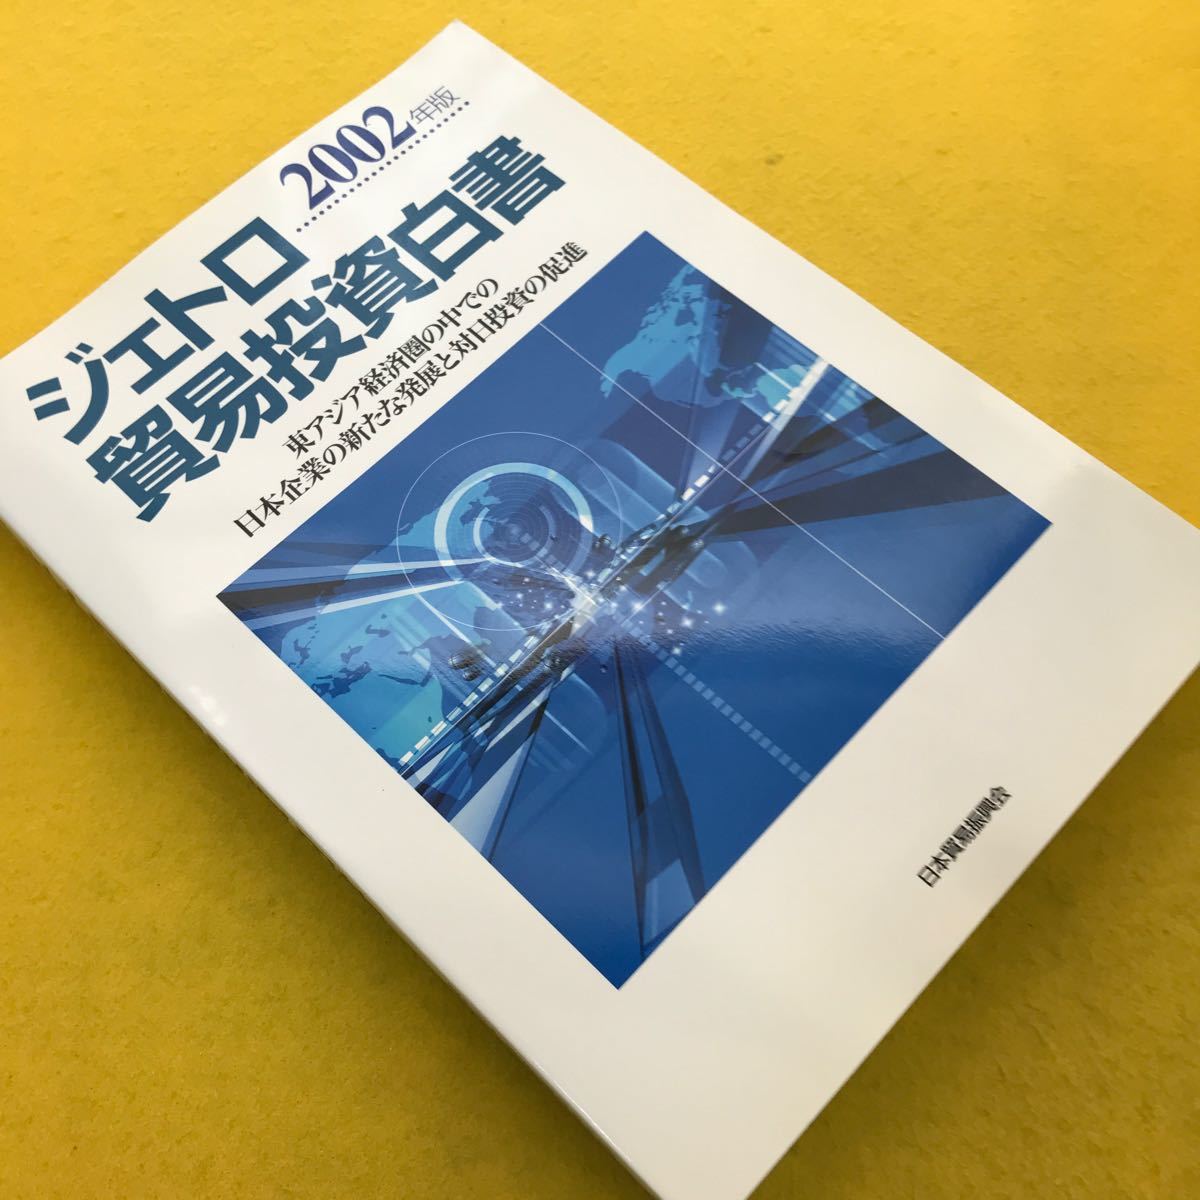 F63-042 2002年版 ジェトロ貿易投資白書 東アジア経済圏の中での日本企業の新たな発展と対日投資の促進_画像2